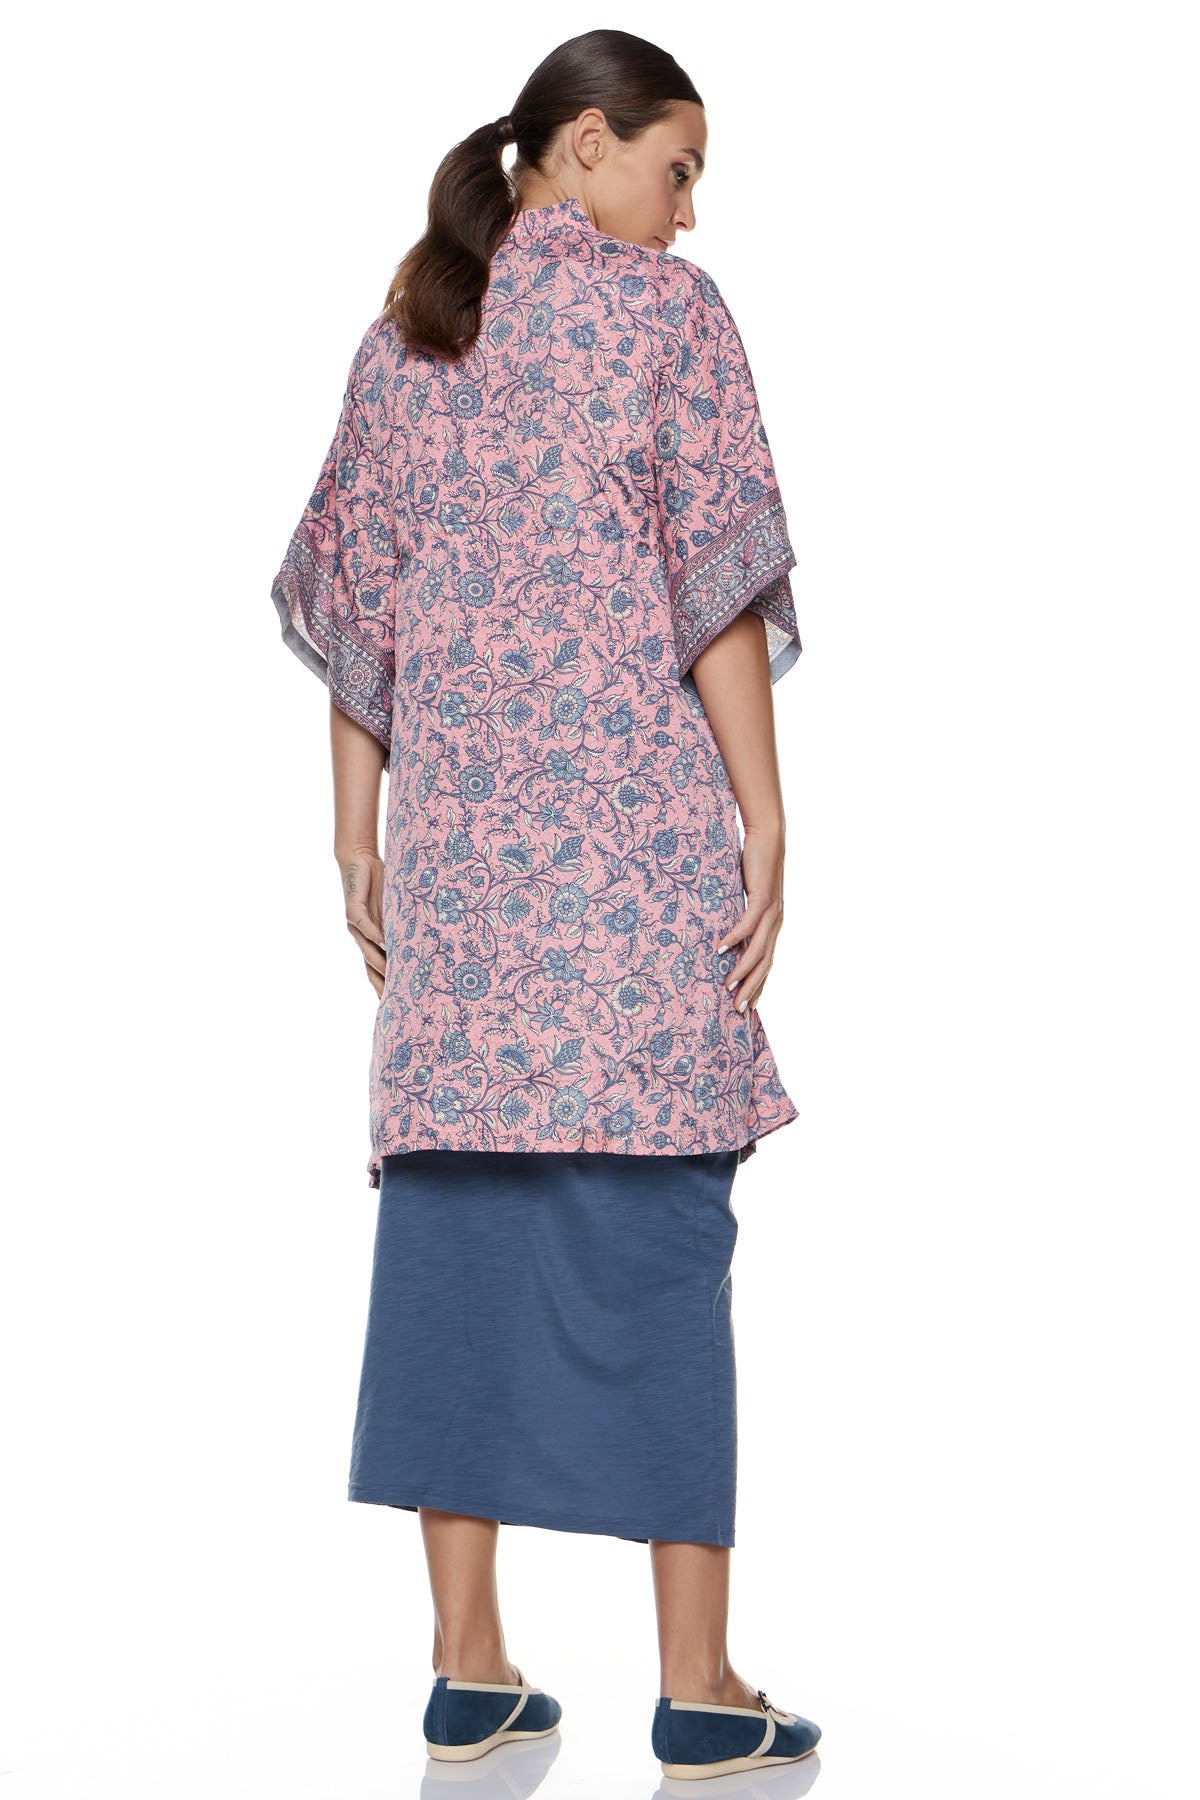 Chic & Simple Lola Shirt/Kaftan & Midi Skirt Combination - Pink with Blue Floral & Blue Ruffle